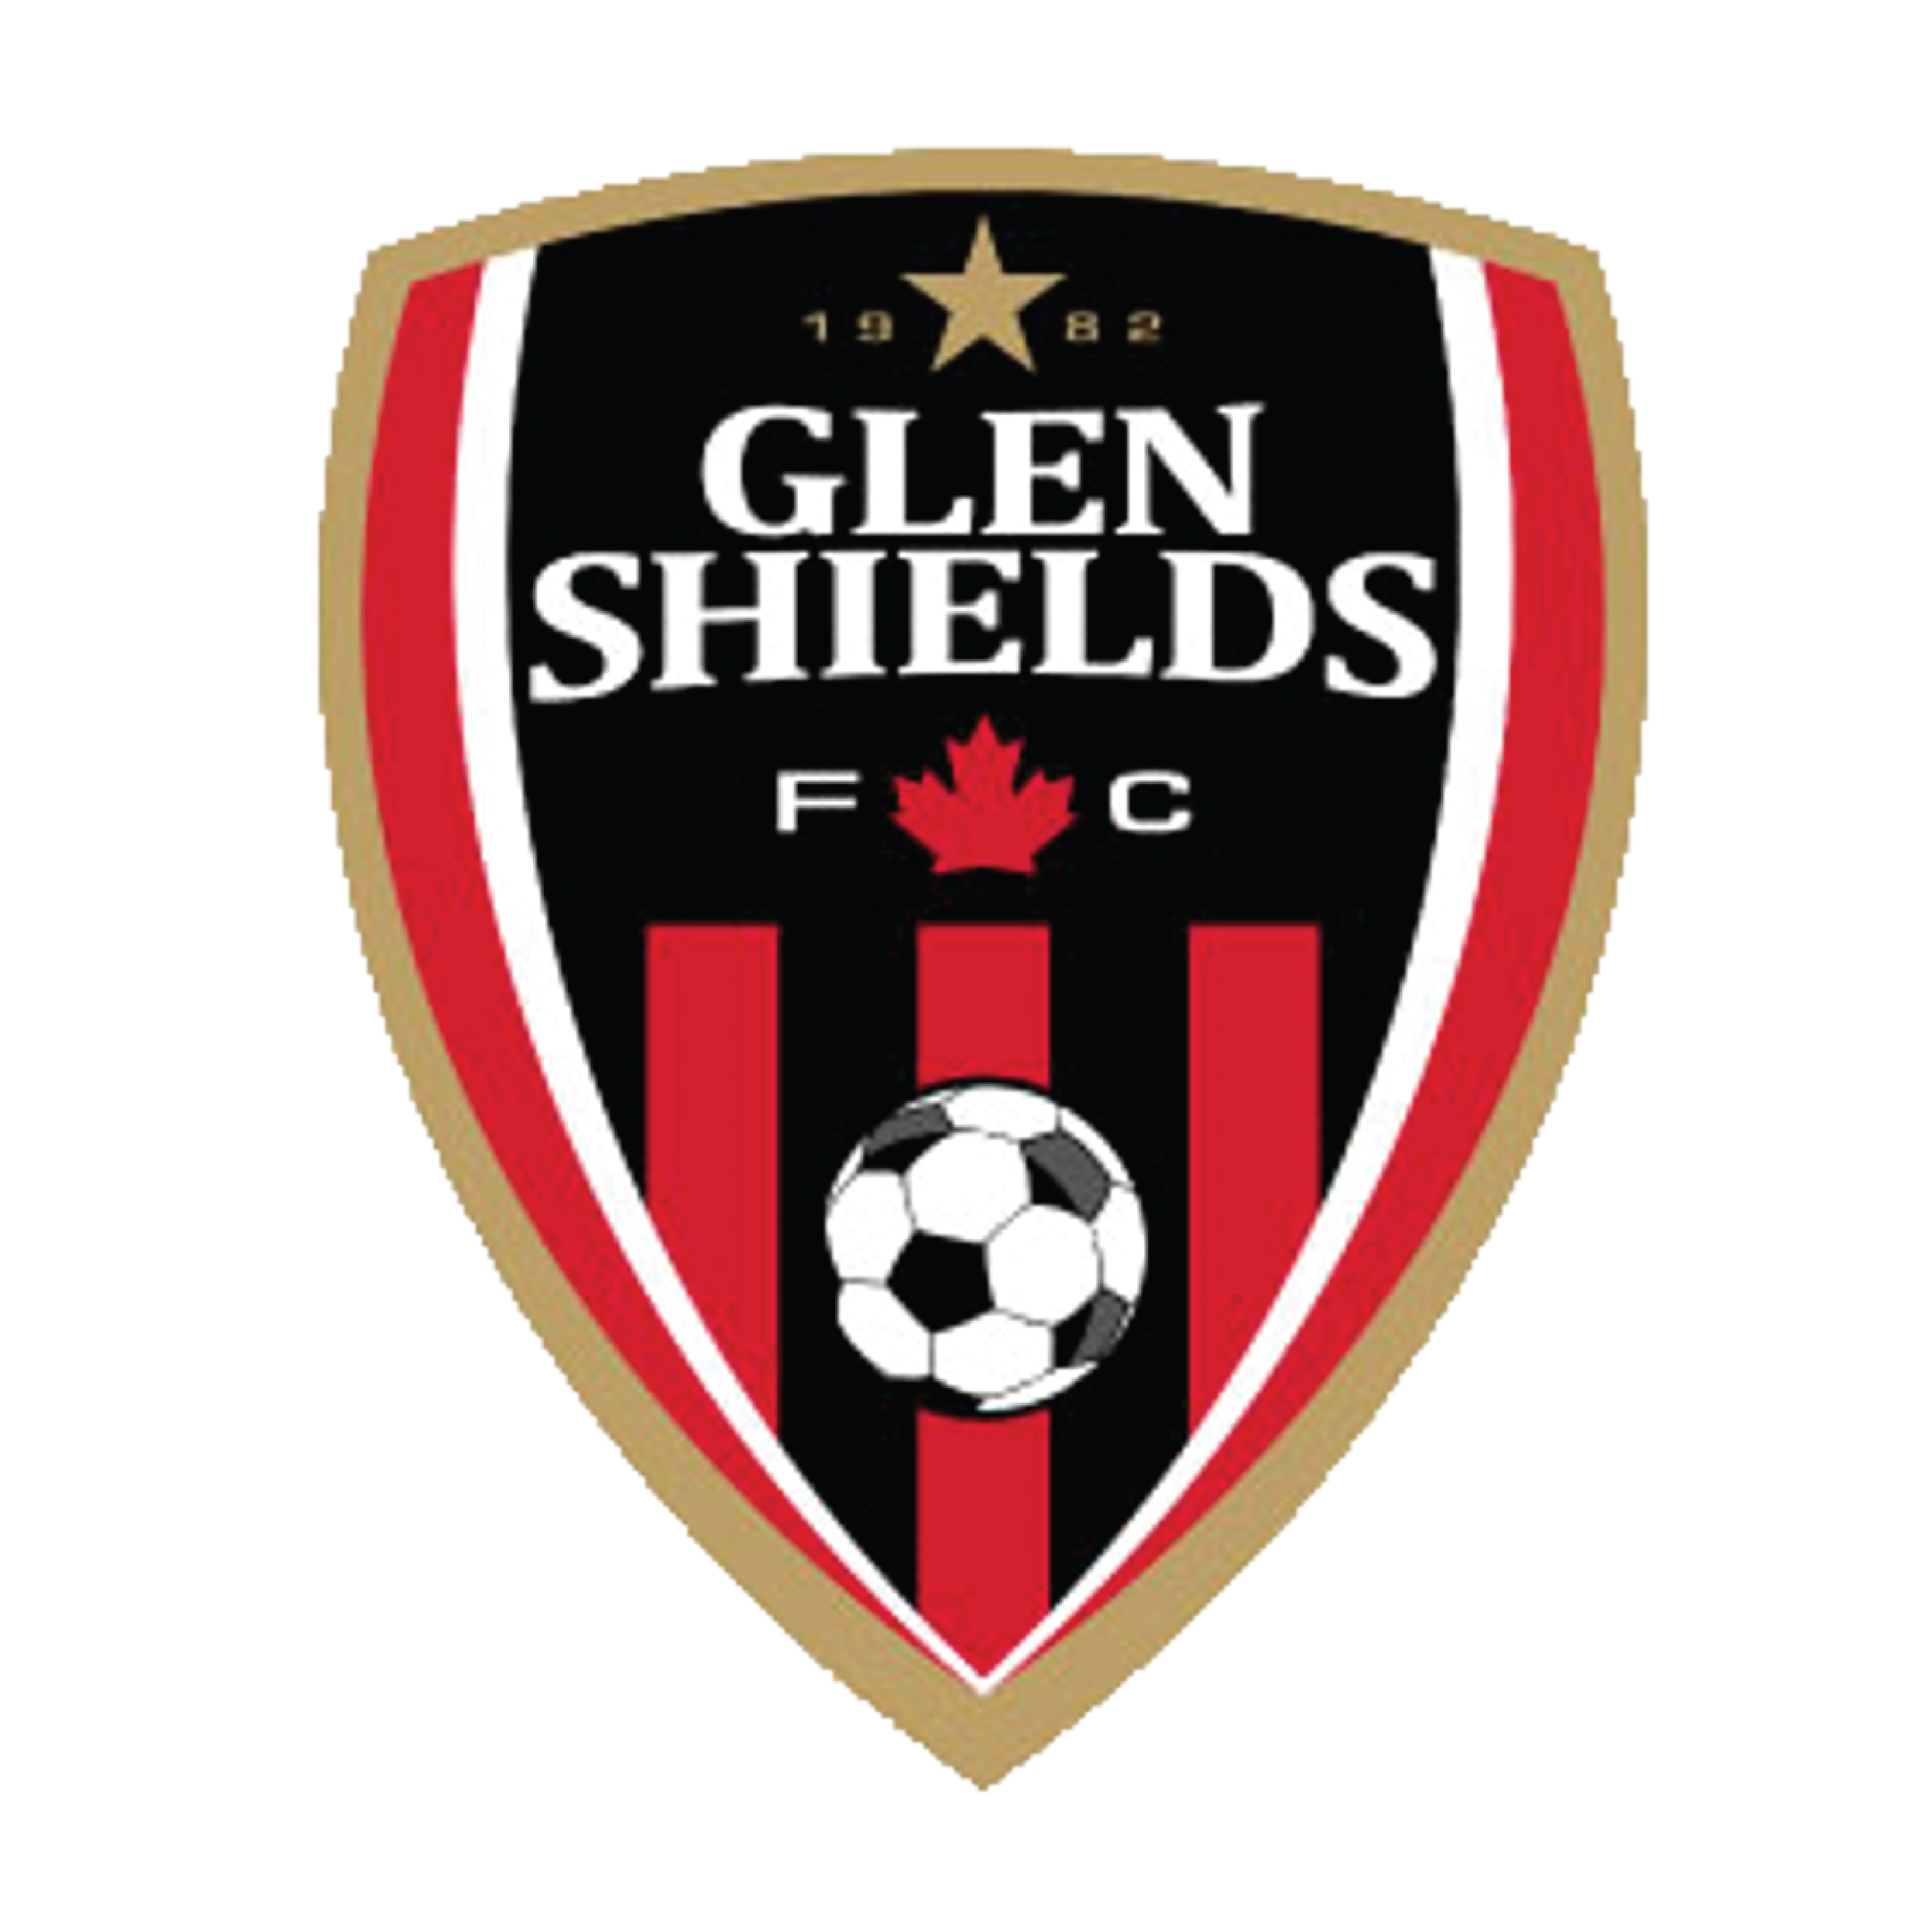 Glen Shields Futbol Club